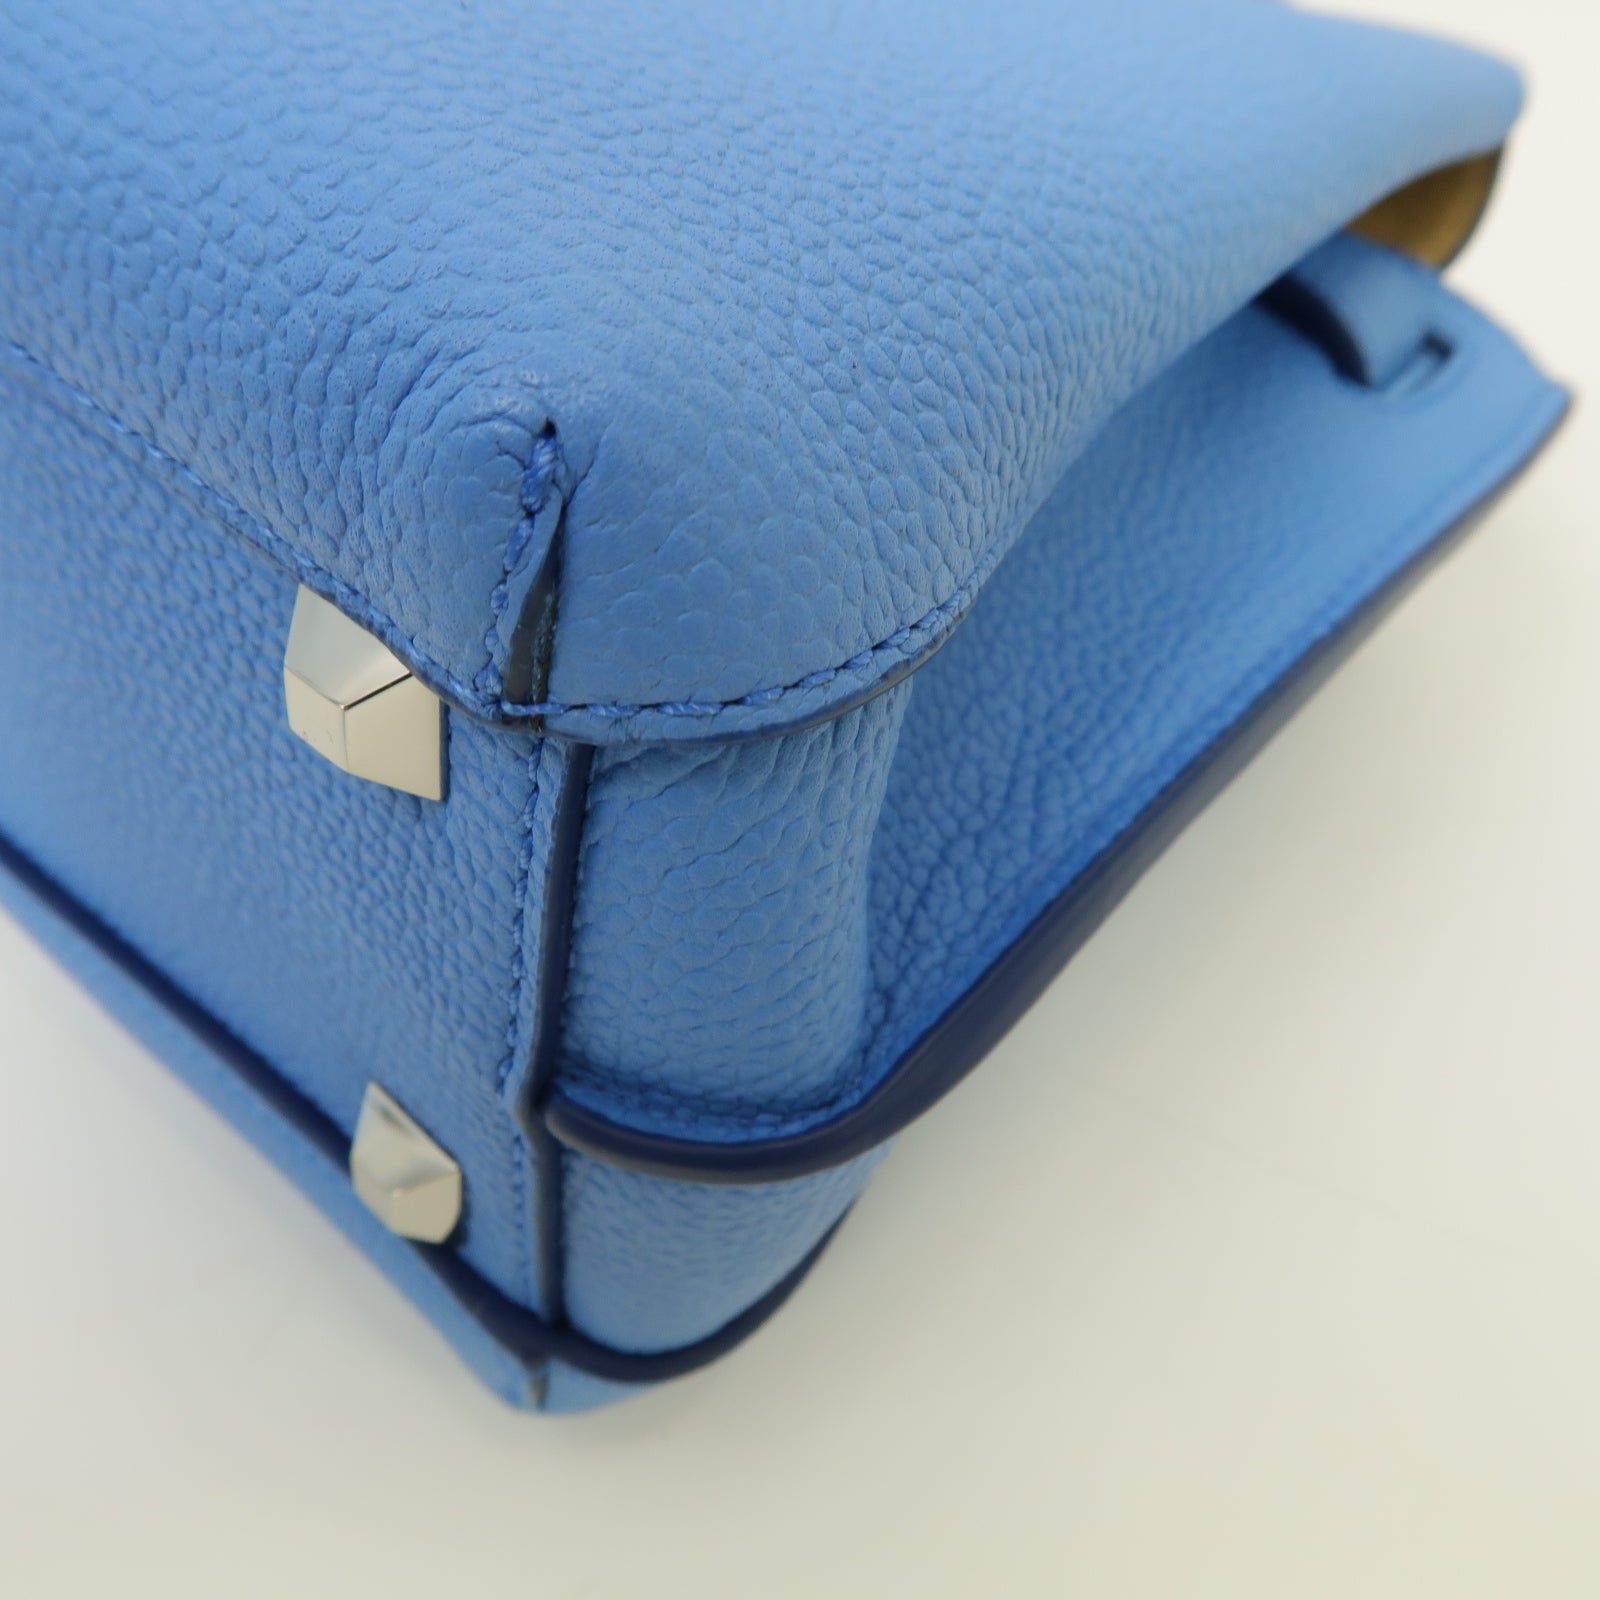 LOUIS VUITTON Monogram Turenne MM Shoulder Bag Gold Buckle Handle Shou –  Brand Off Hong Kong Online Store